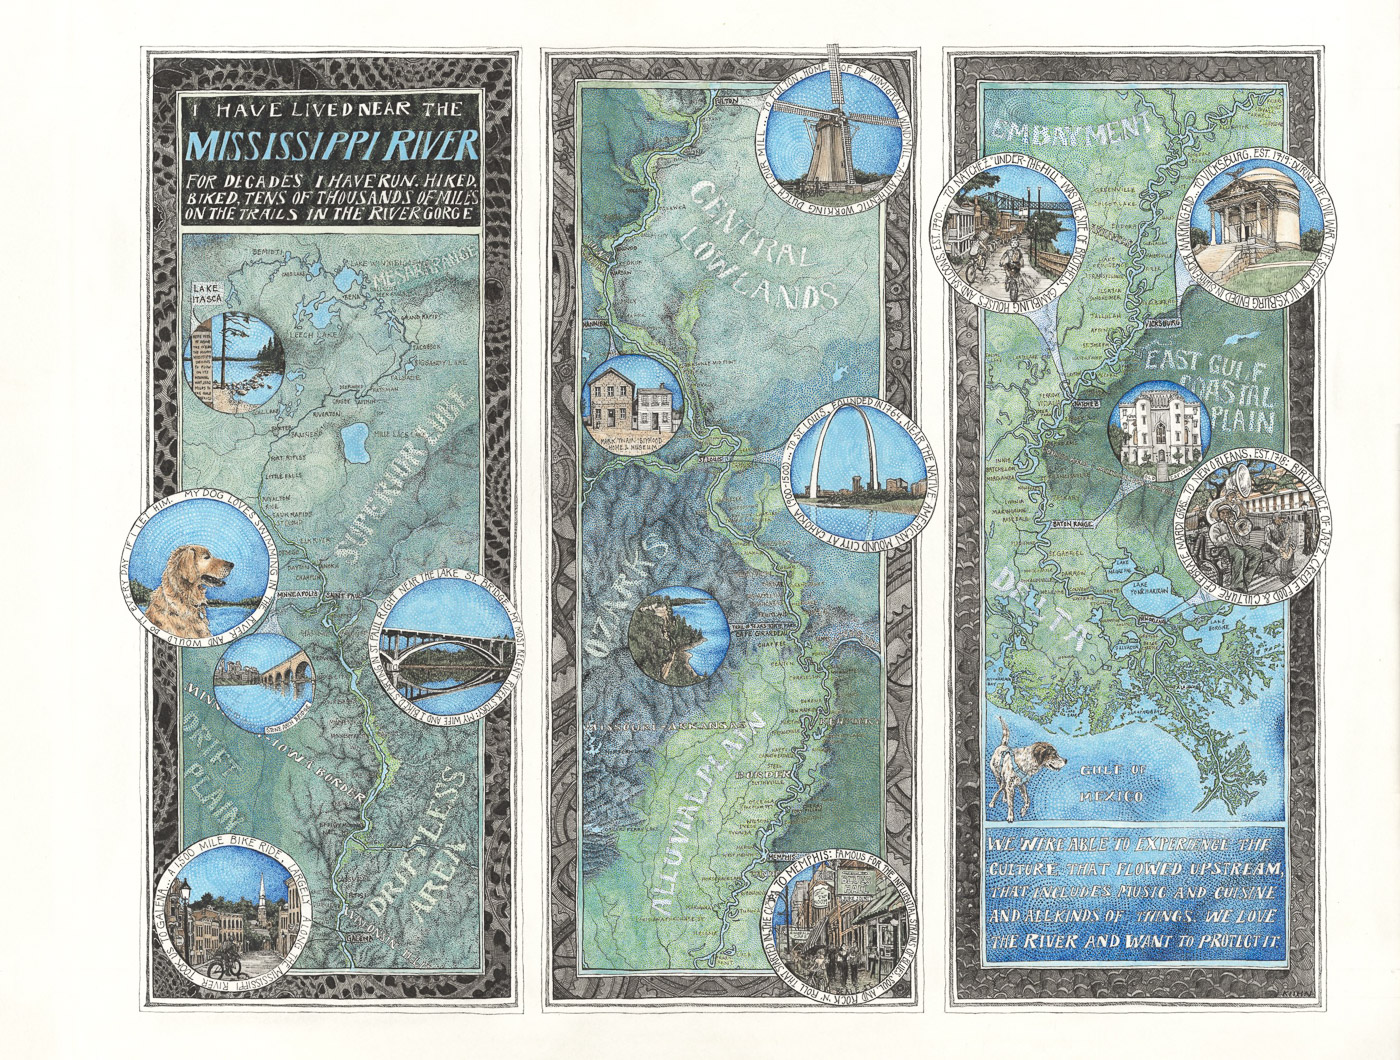 "Mississippi River Map," by Stefanie Kiihn